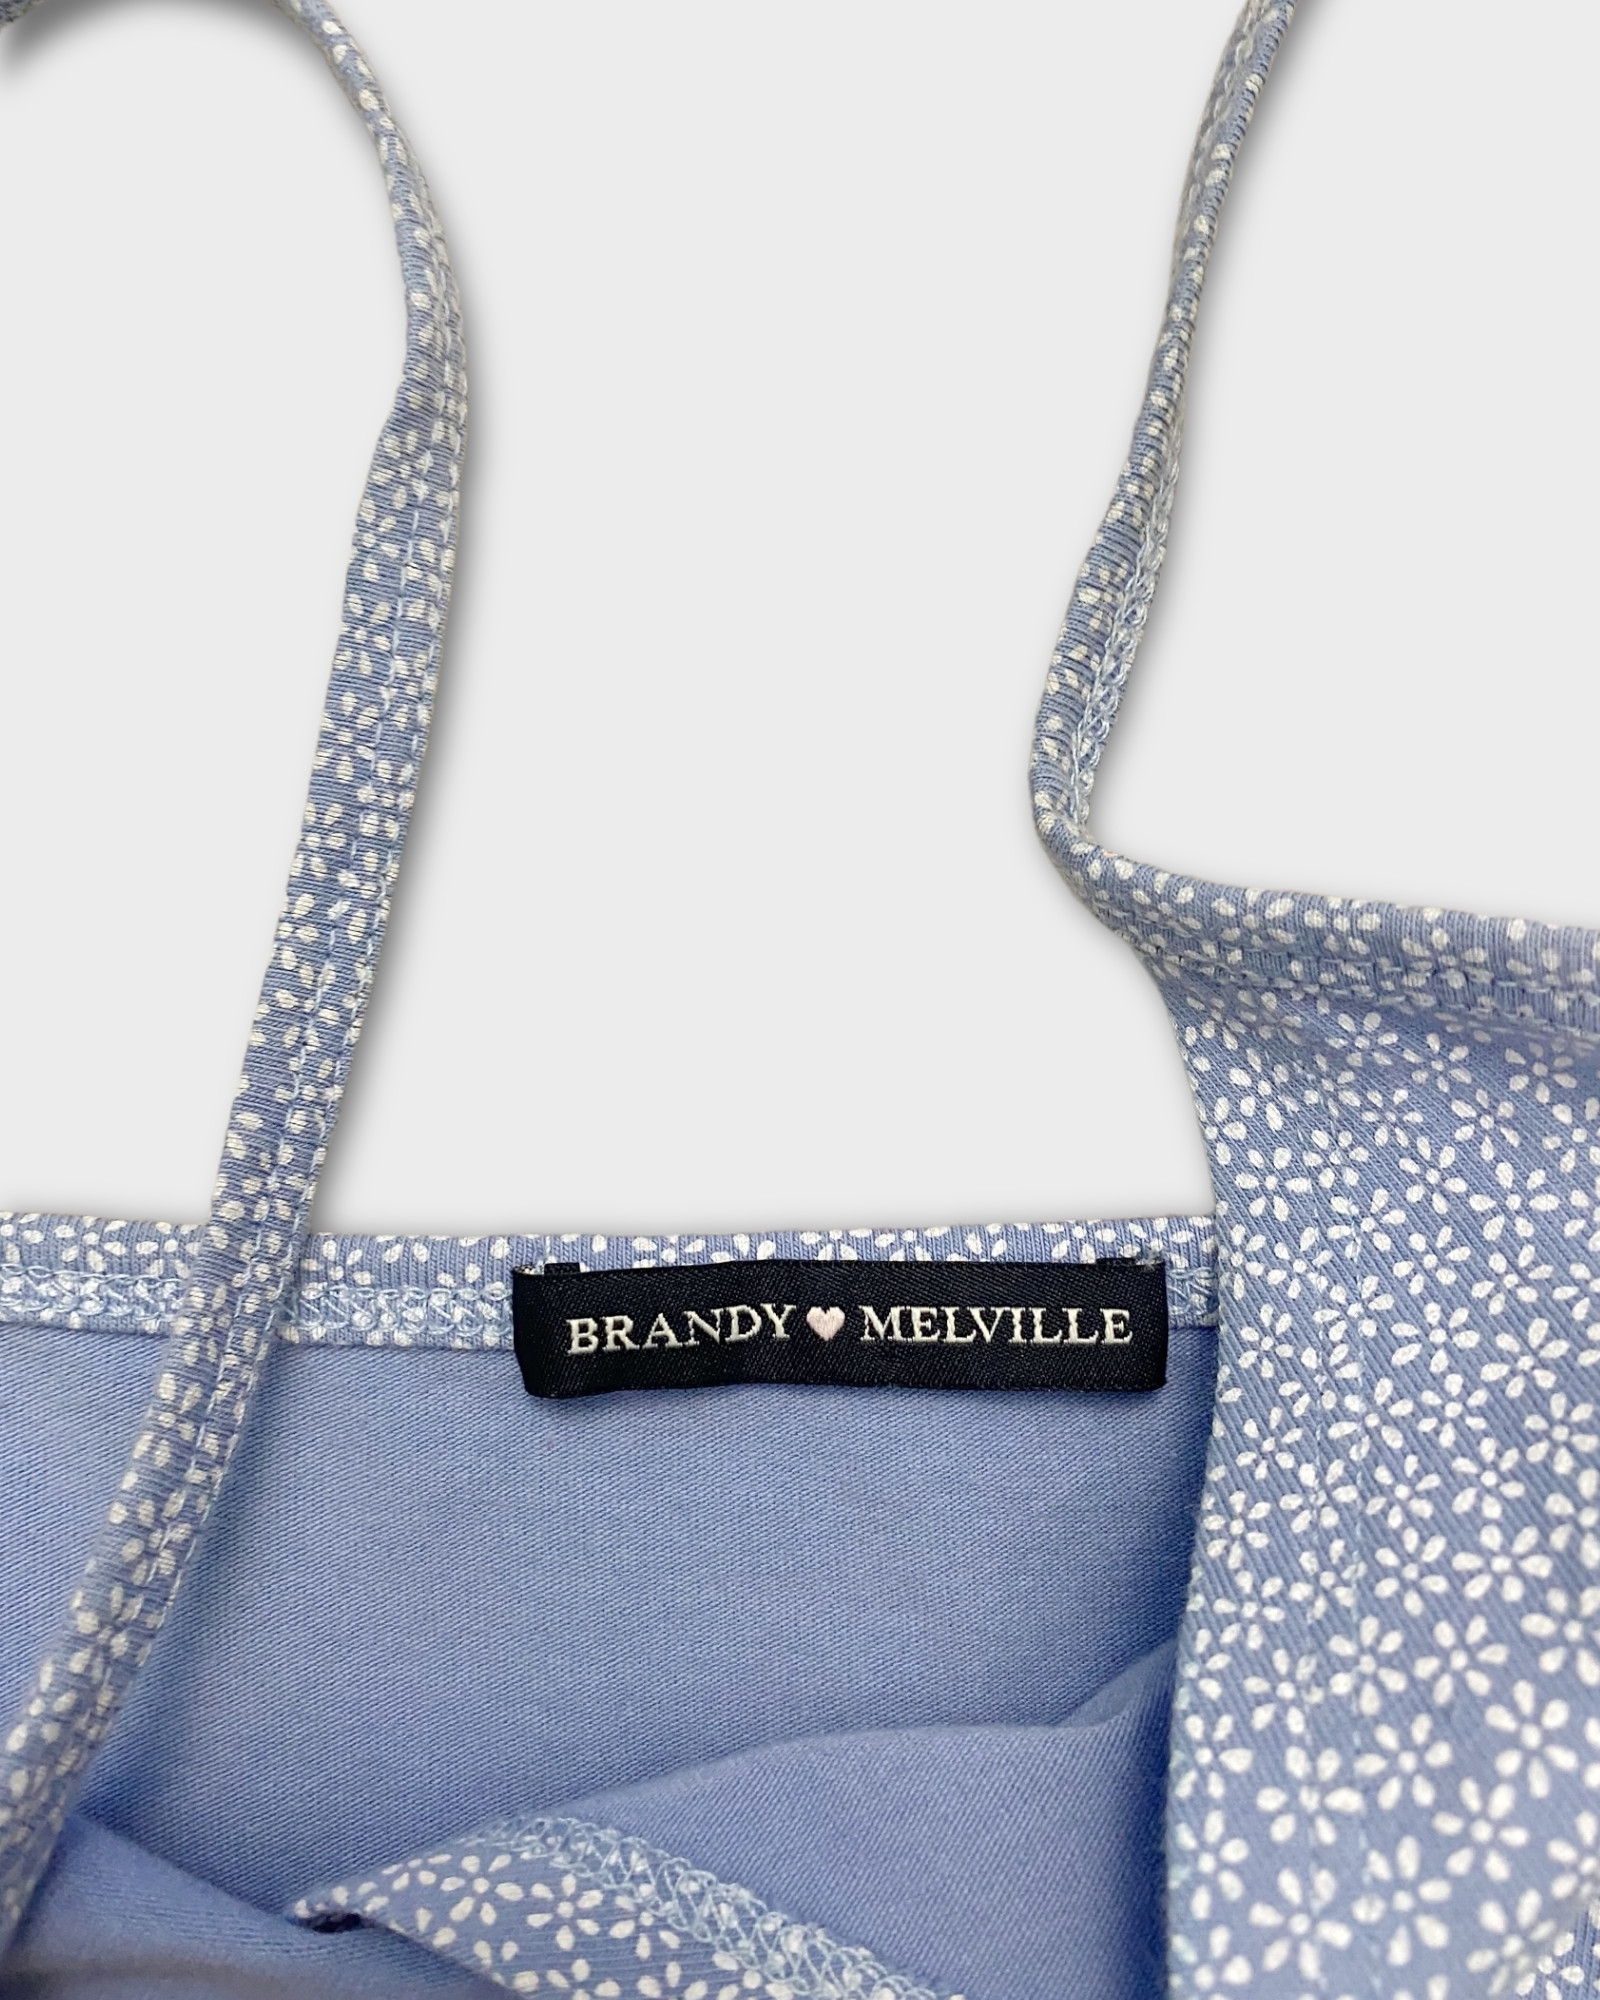 Brandy Melville - Blue Floral Amara dress on Designer Wardrobe